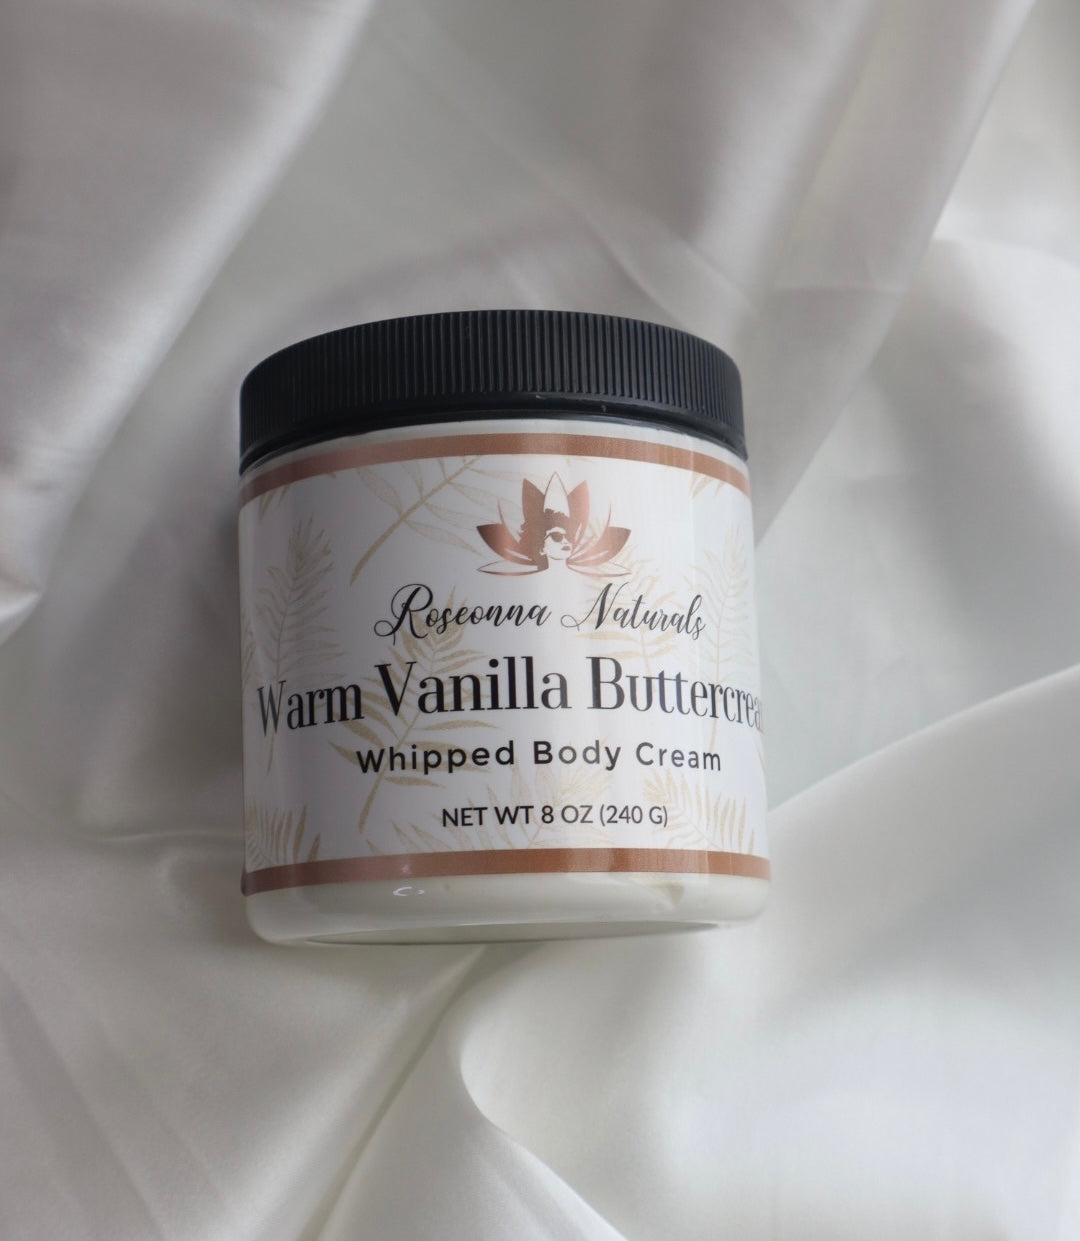 Warm Vanilla Buttercream Whipped Body Cream